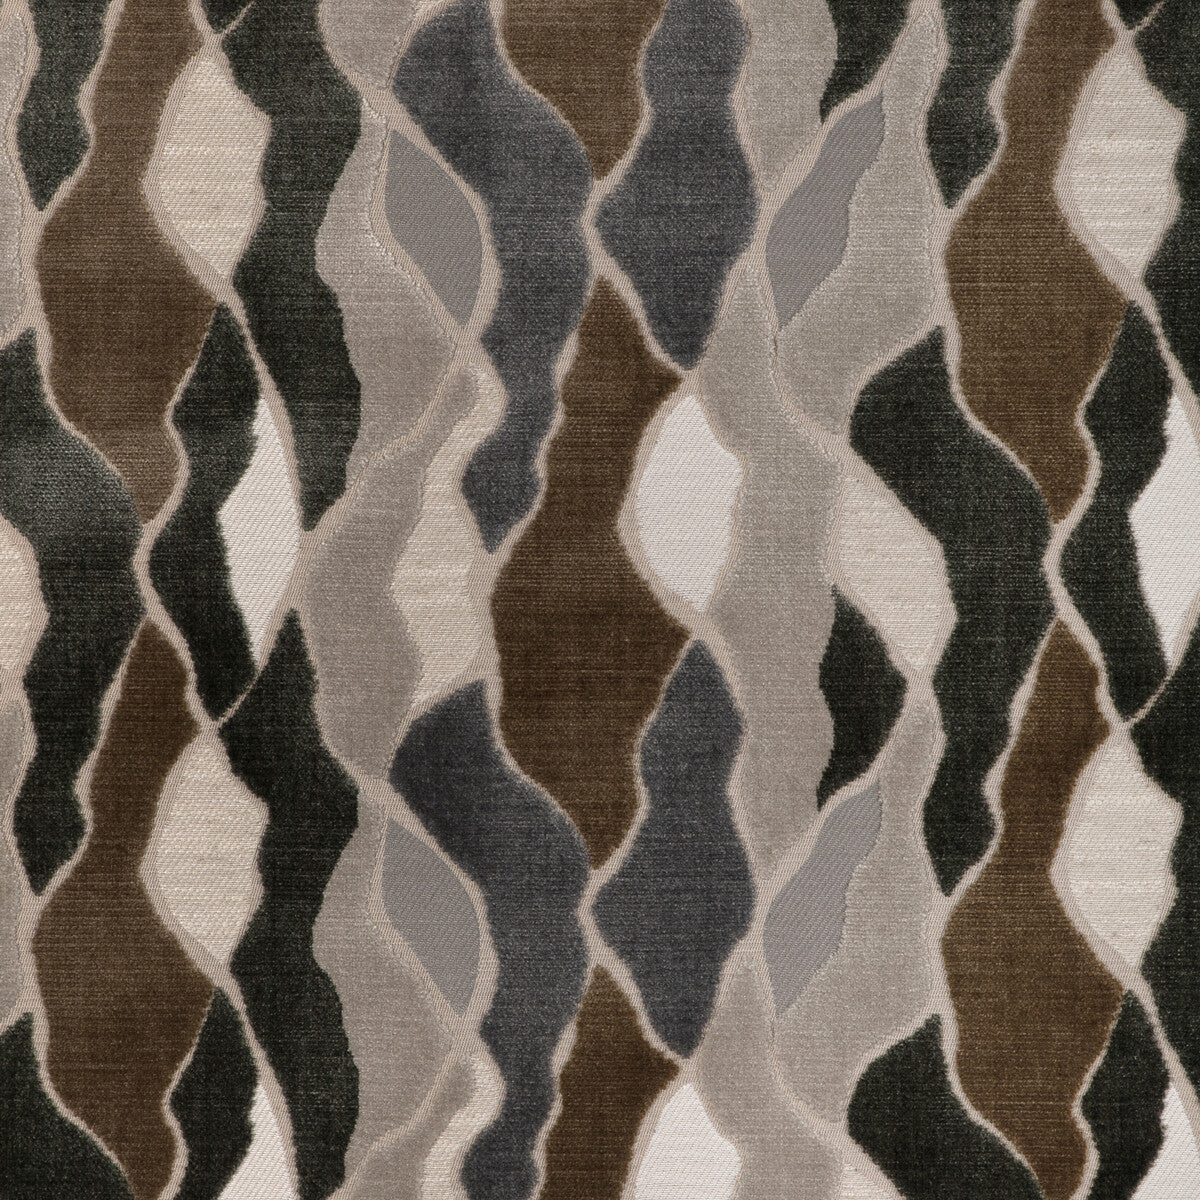 Kravet Design fabric in 37170-1135 color - pattern 37170.1135.0 - by Kravet Design in the Modern Velvets collection